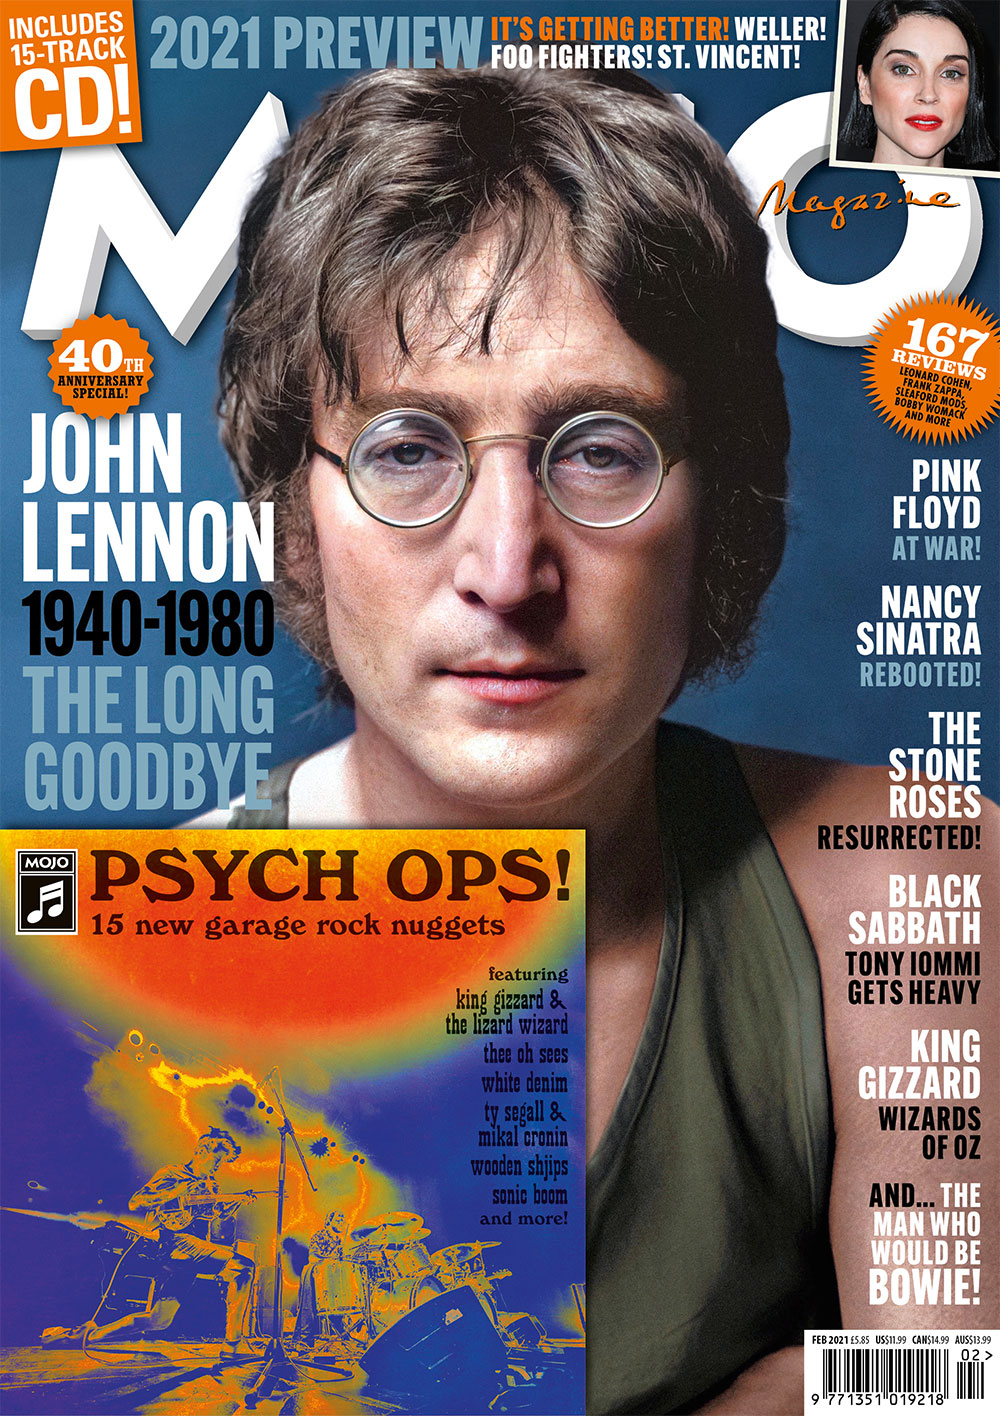 Mojo Magazine #327 February 2021 John Lennon The Beatles & Free CD